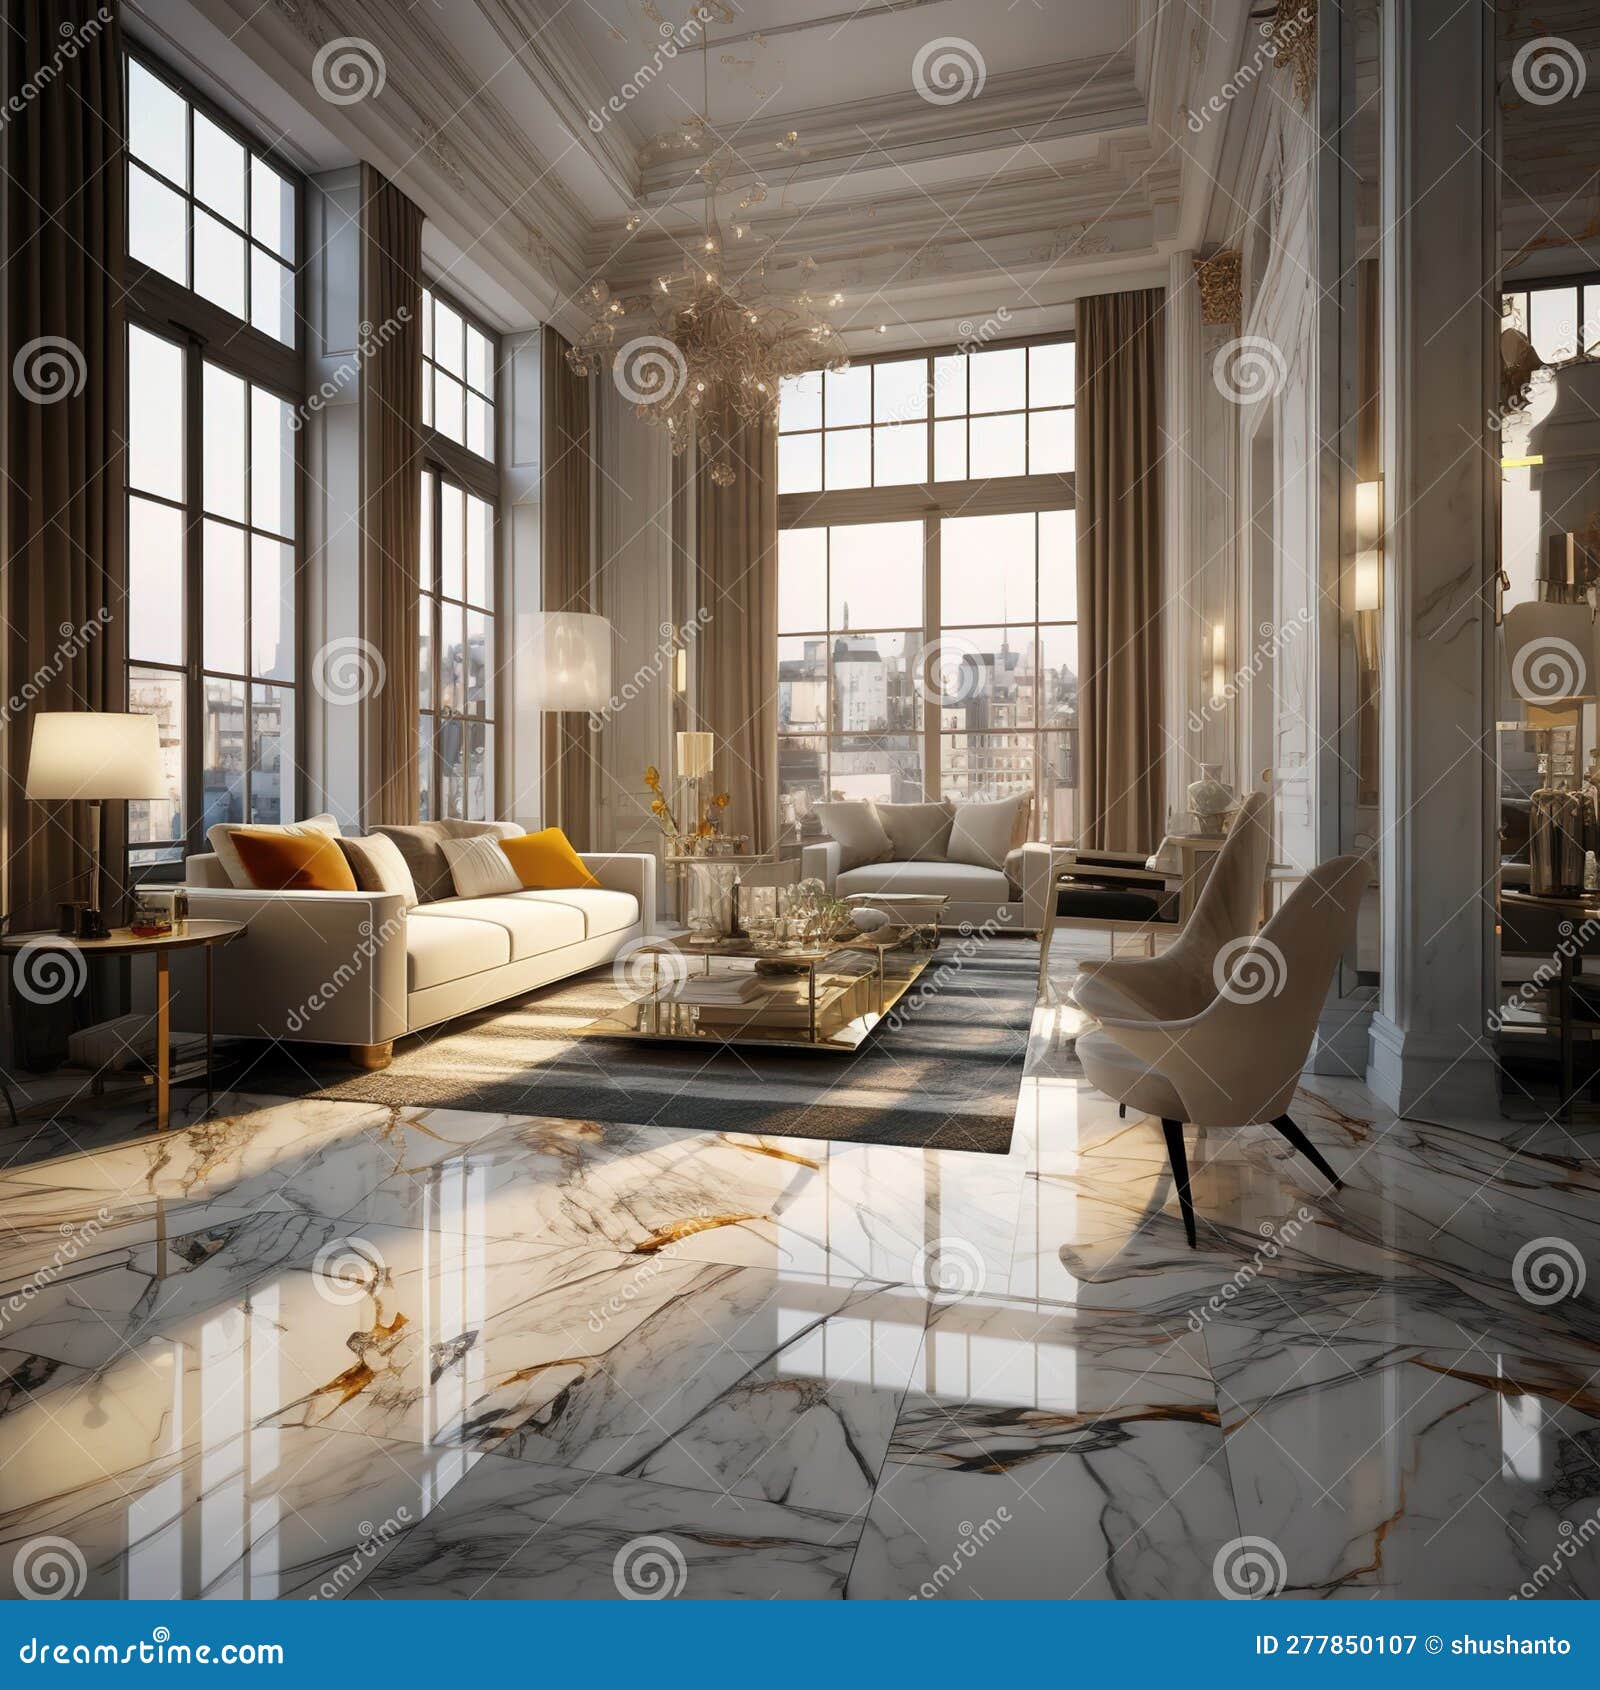 Stunning Lavish Apartment Interior Design Stock Illustration ...